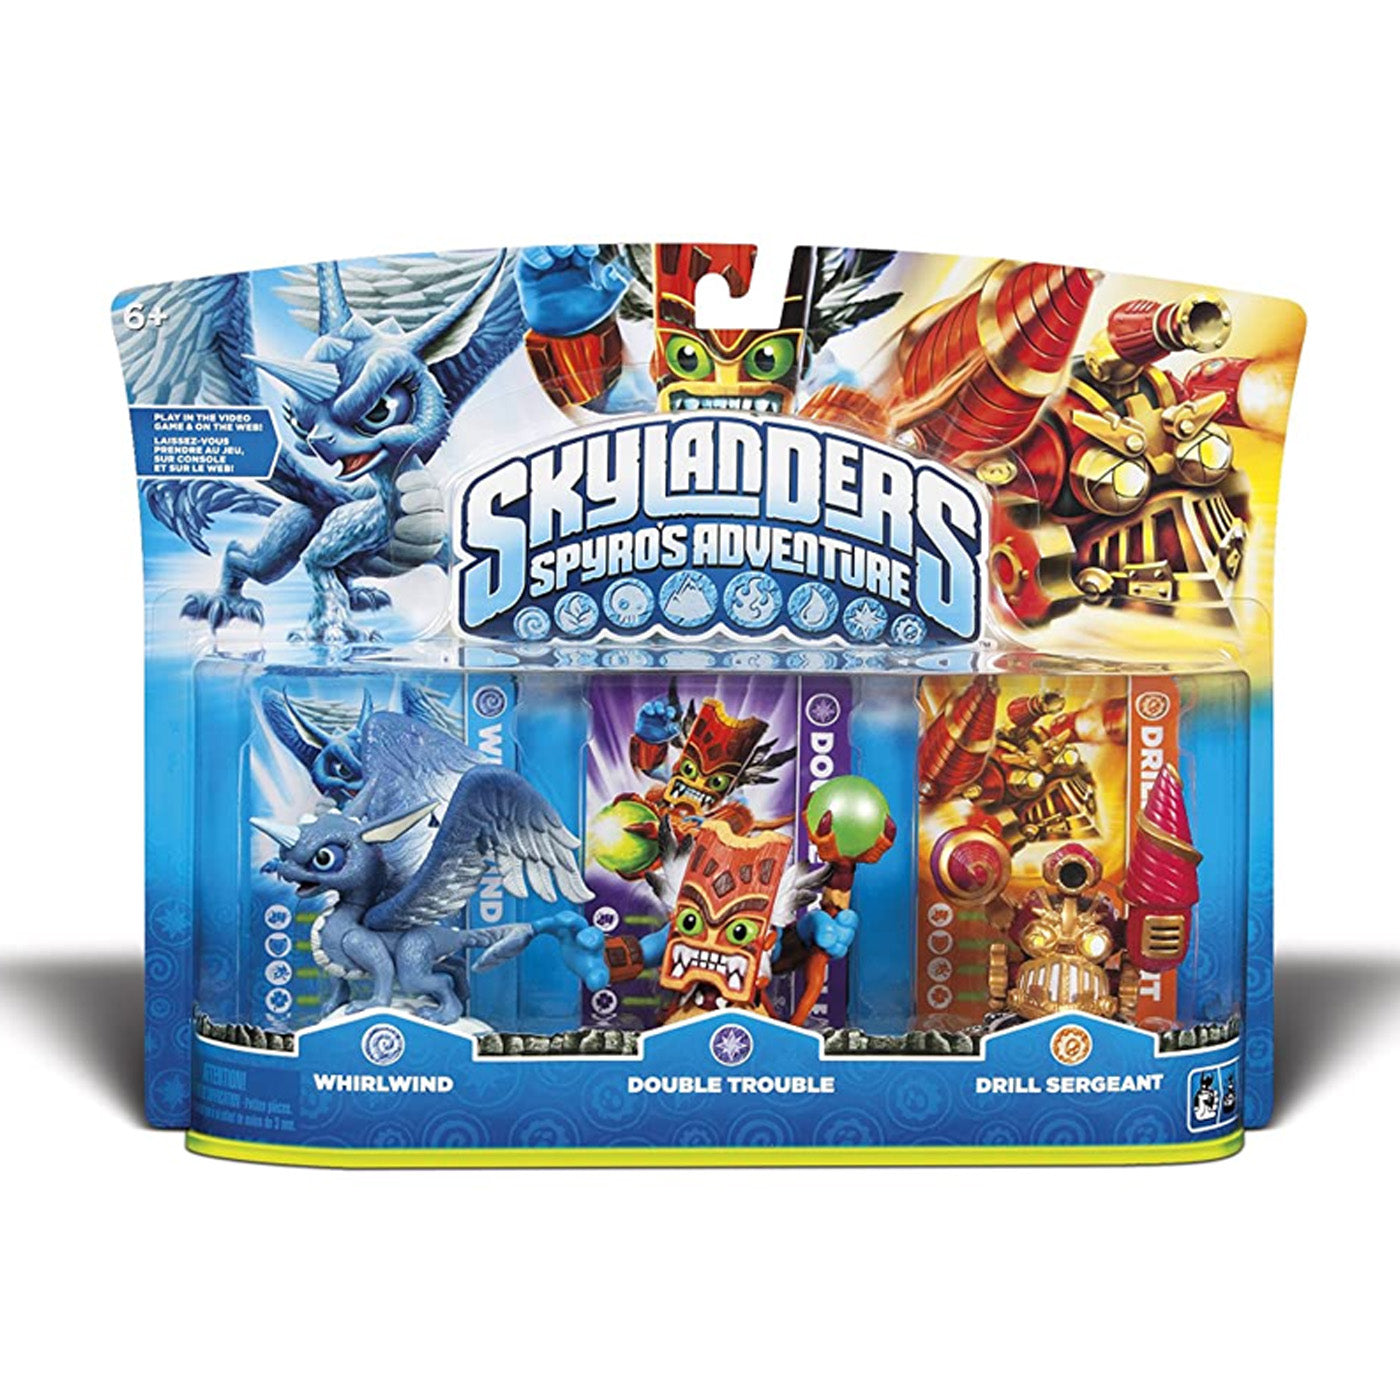 Skylanders Spyro's Adventure Triple Character Pack (Whirlwind, Double Trouble, Drill Sergeant)